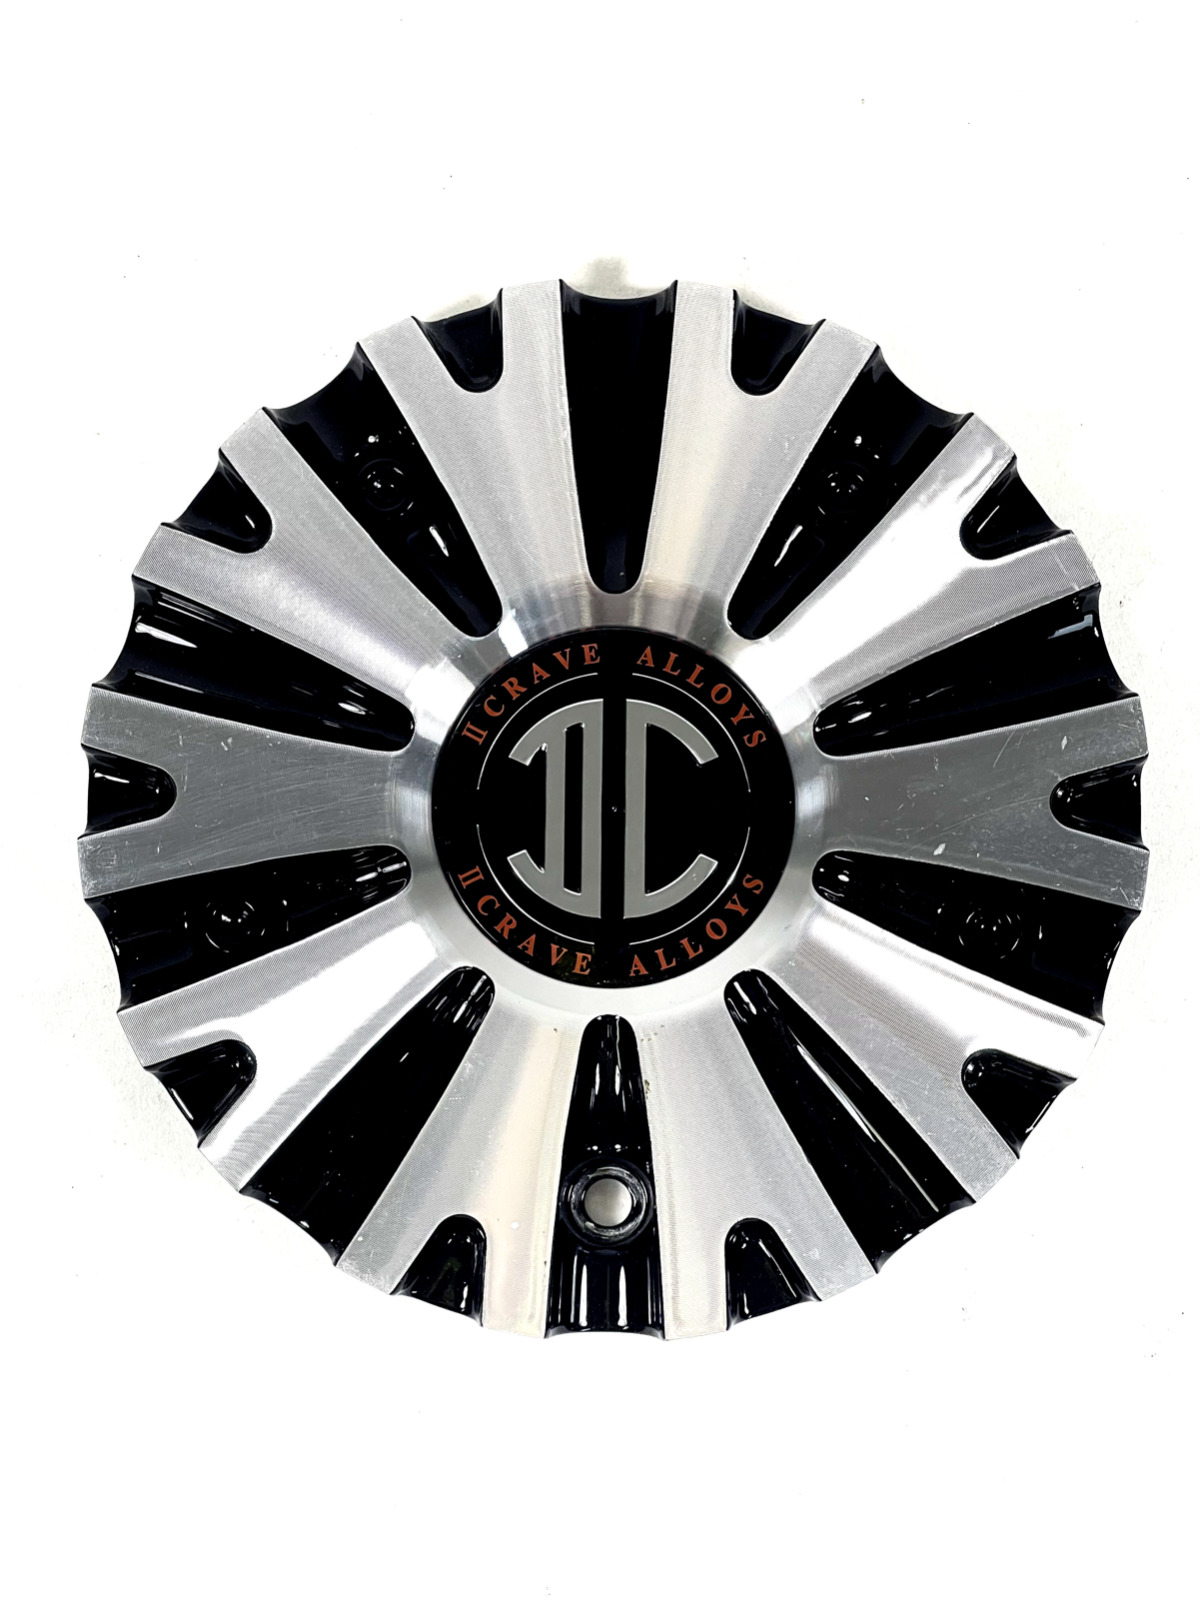 2 Crave Wheels Silver / Gloss Black Wheel Rim Center Cap # 106-CAP-B (1 CAP)